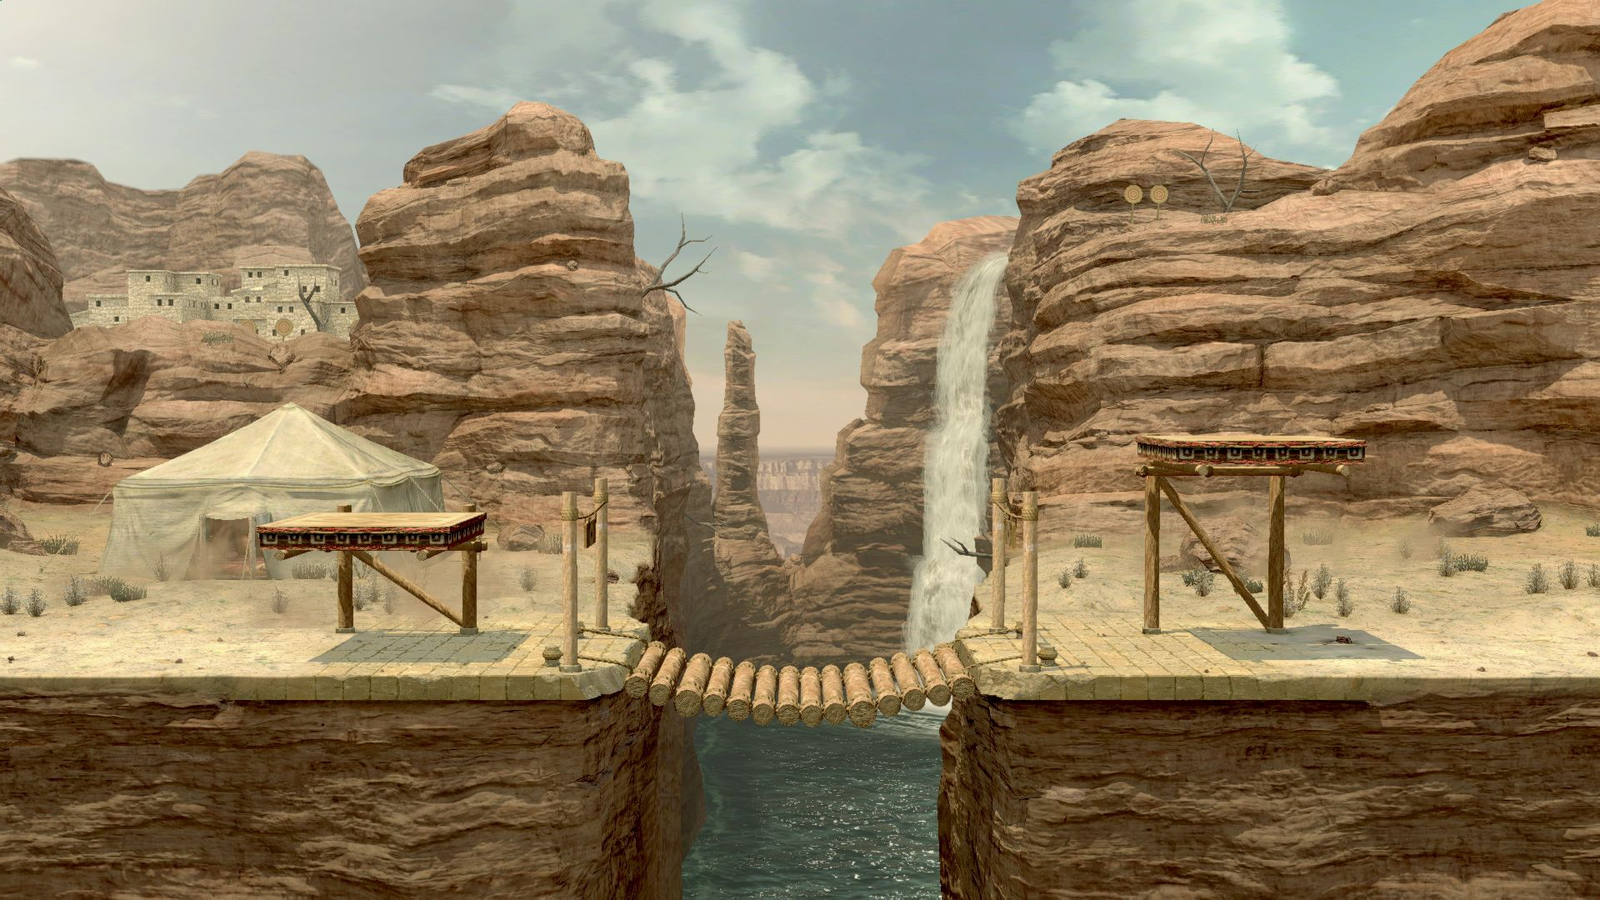 Zelda: Ocarina of Time 3D 4K 1.4.0 Update Trailer (HD Texture Pack) 